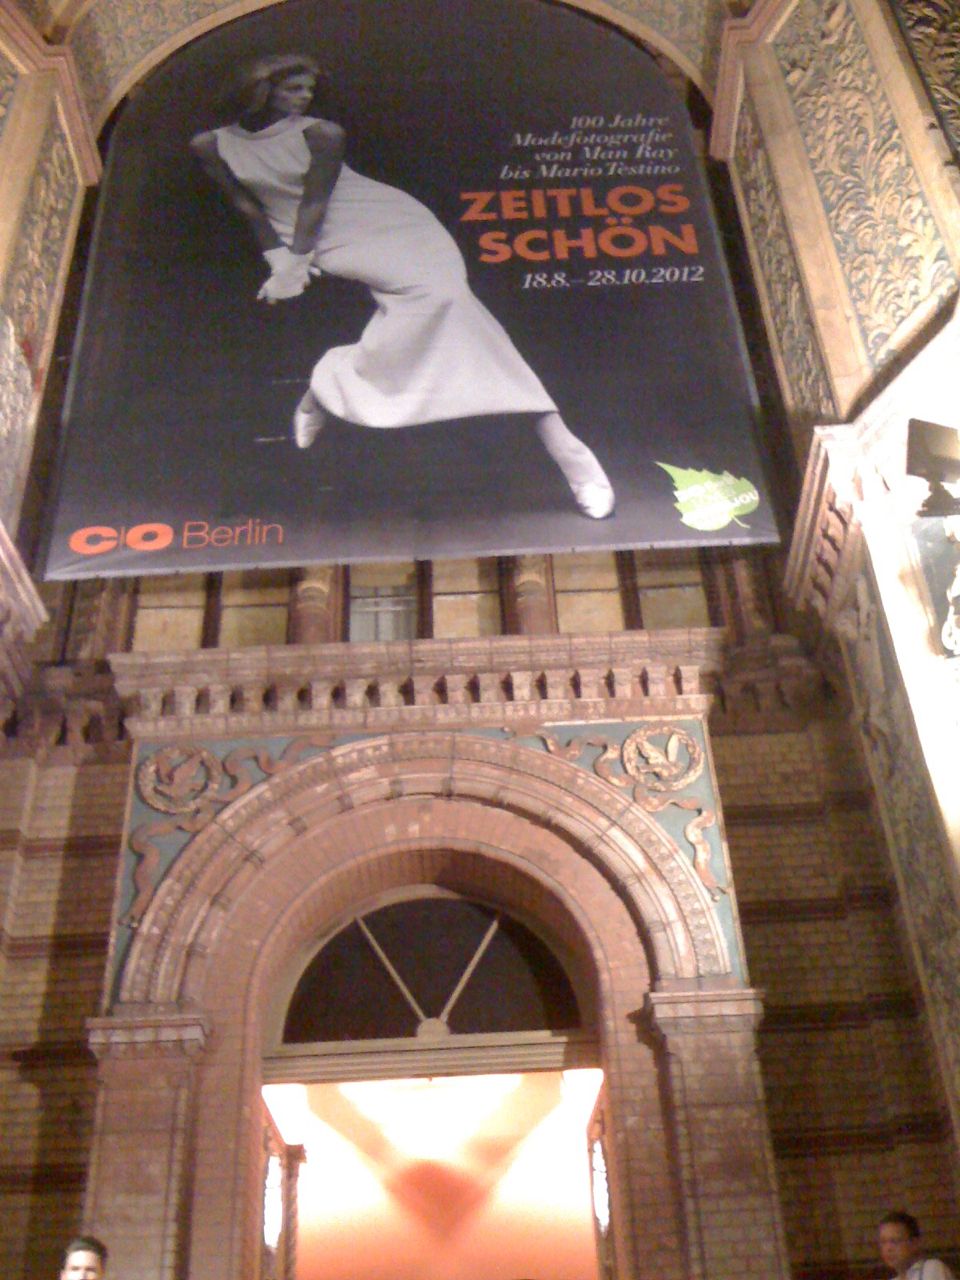 <!--:en-->A Vogue night Out!!! at the gallery  C/O Berlin with “Zeitlos Schön”<!--:-->